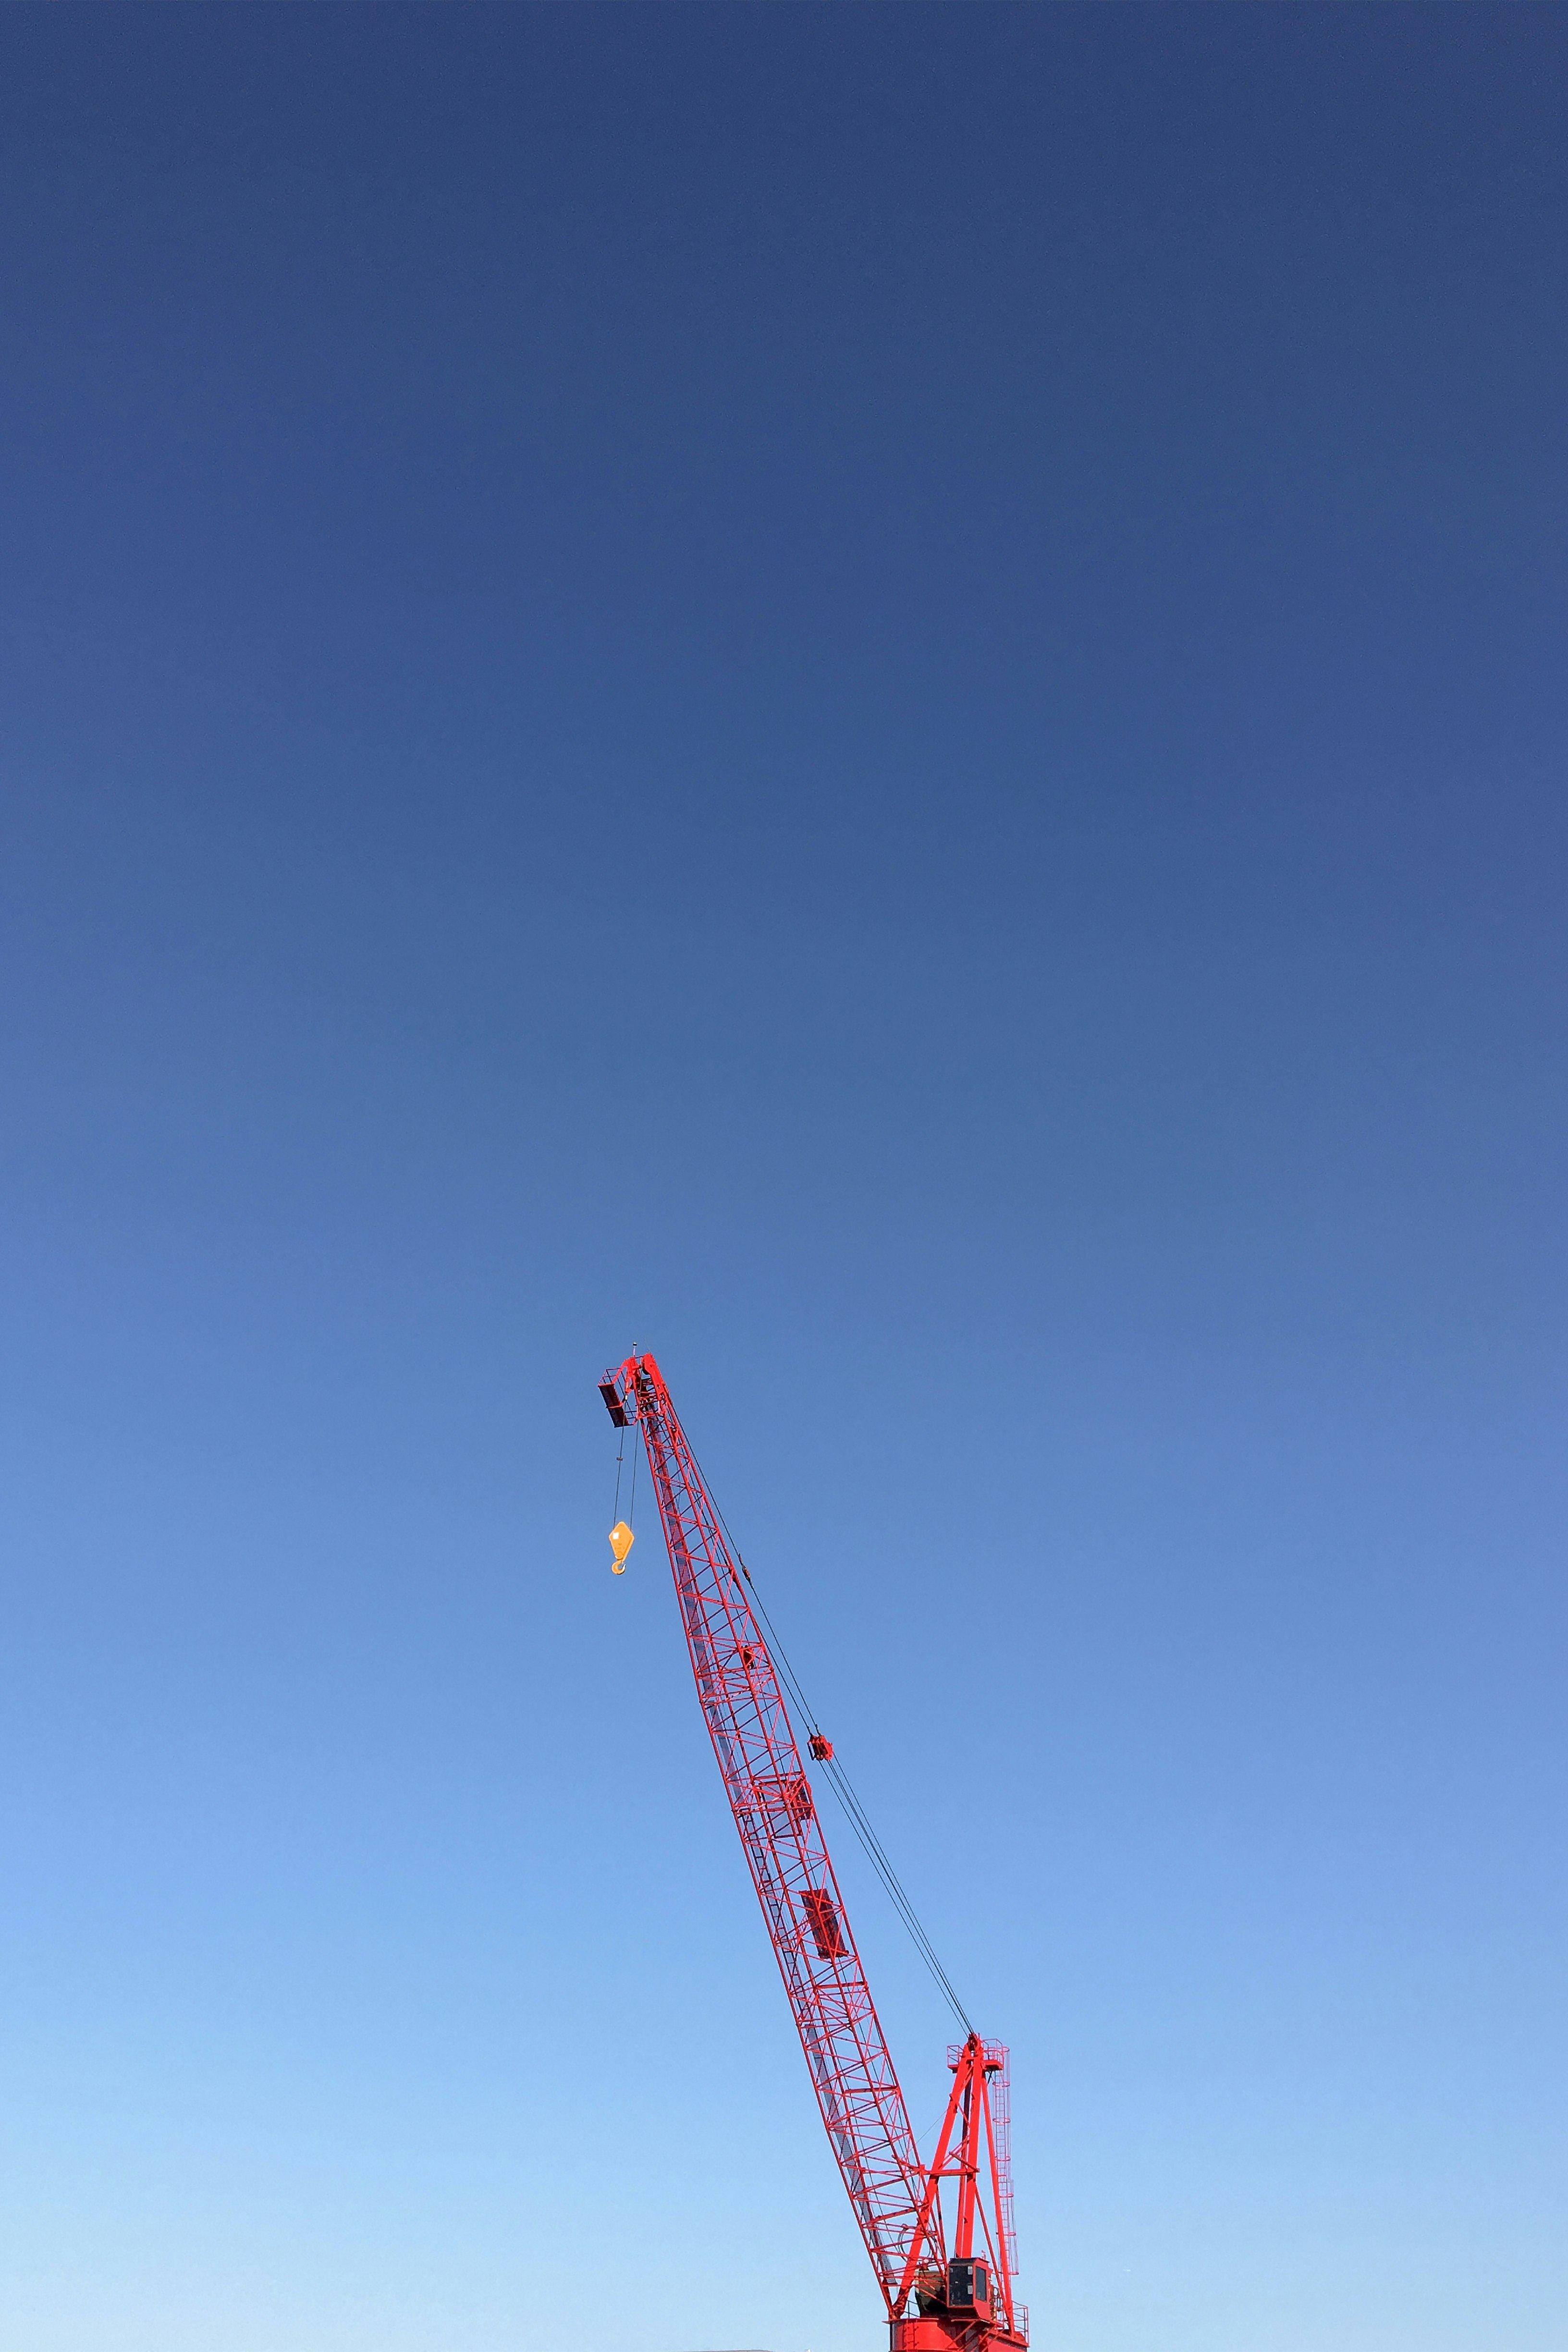 orange crane under blue sky during daytime